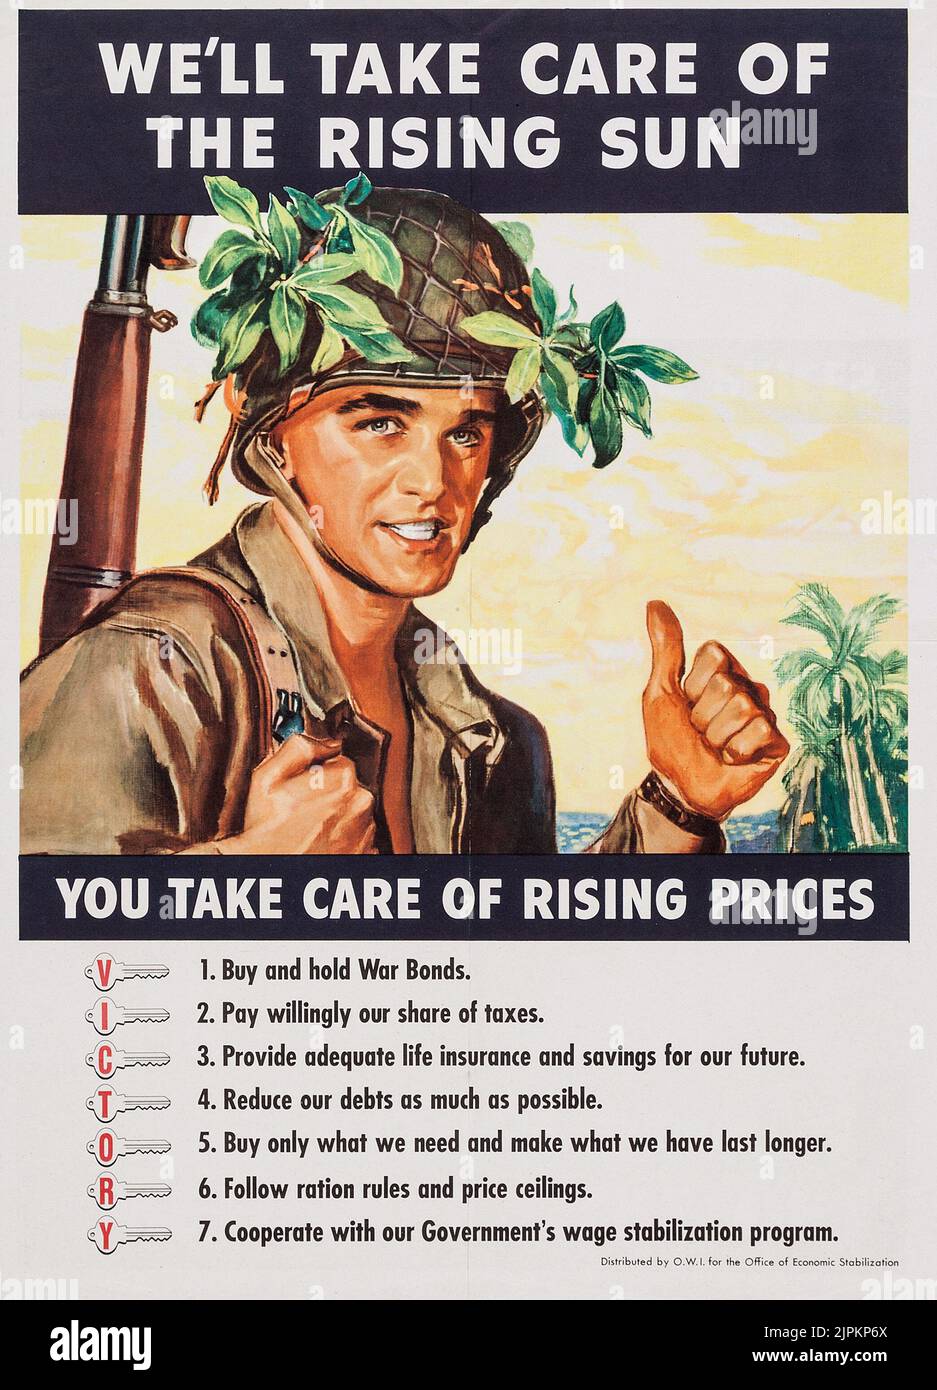 World War II Propaganda (Office of Economic Stabilization, 1944). Poster - 'We'll Take Care of the Rising Sun, You Take Care of Rising Prices.' War poster Stock Photo